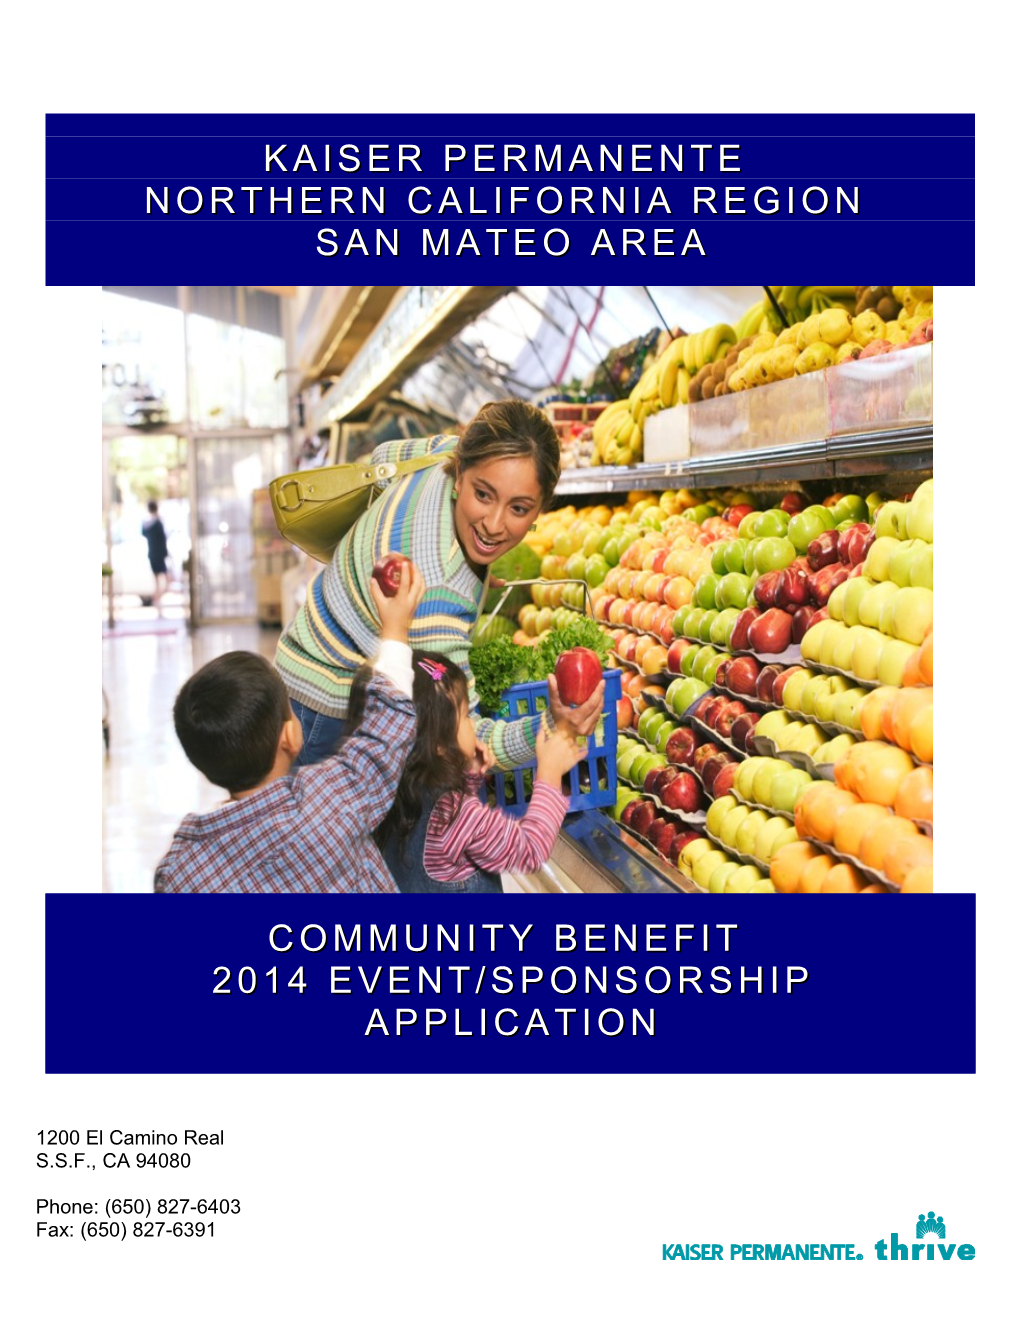 Kaiser Permanente Community Benefit Grants Program